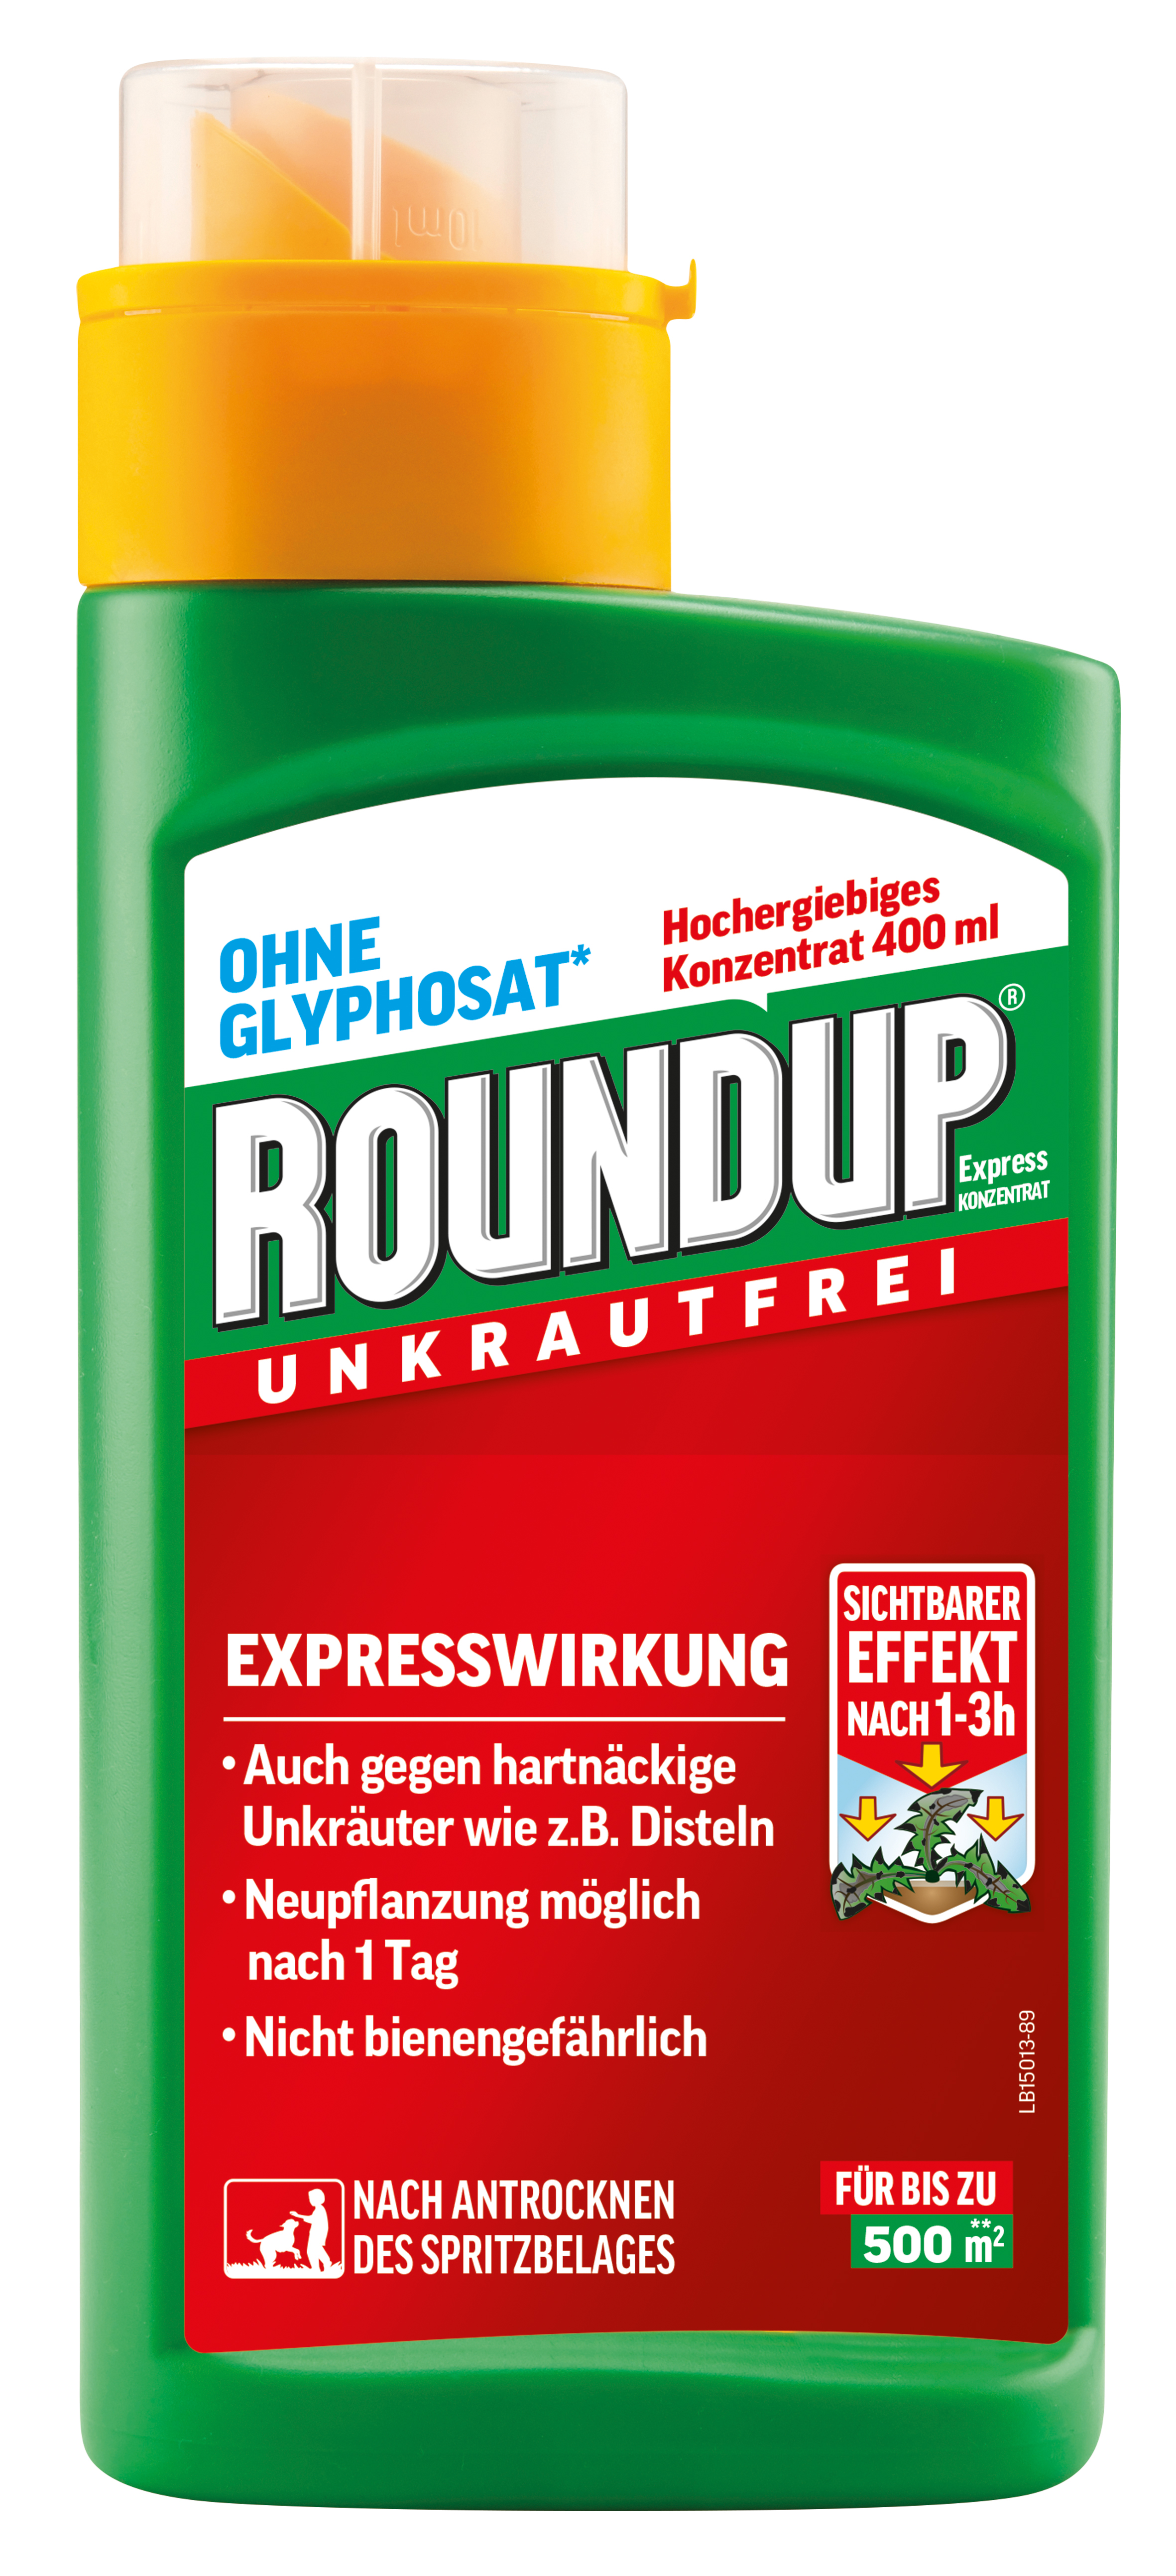 Roundup Unkrautfrei Express Konzentrat 400ml